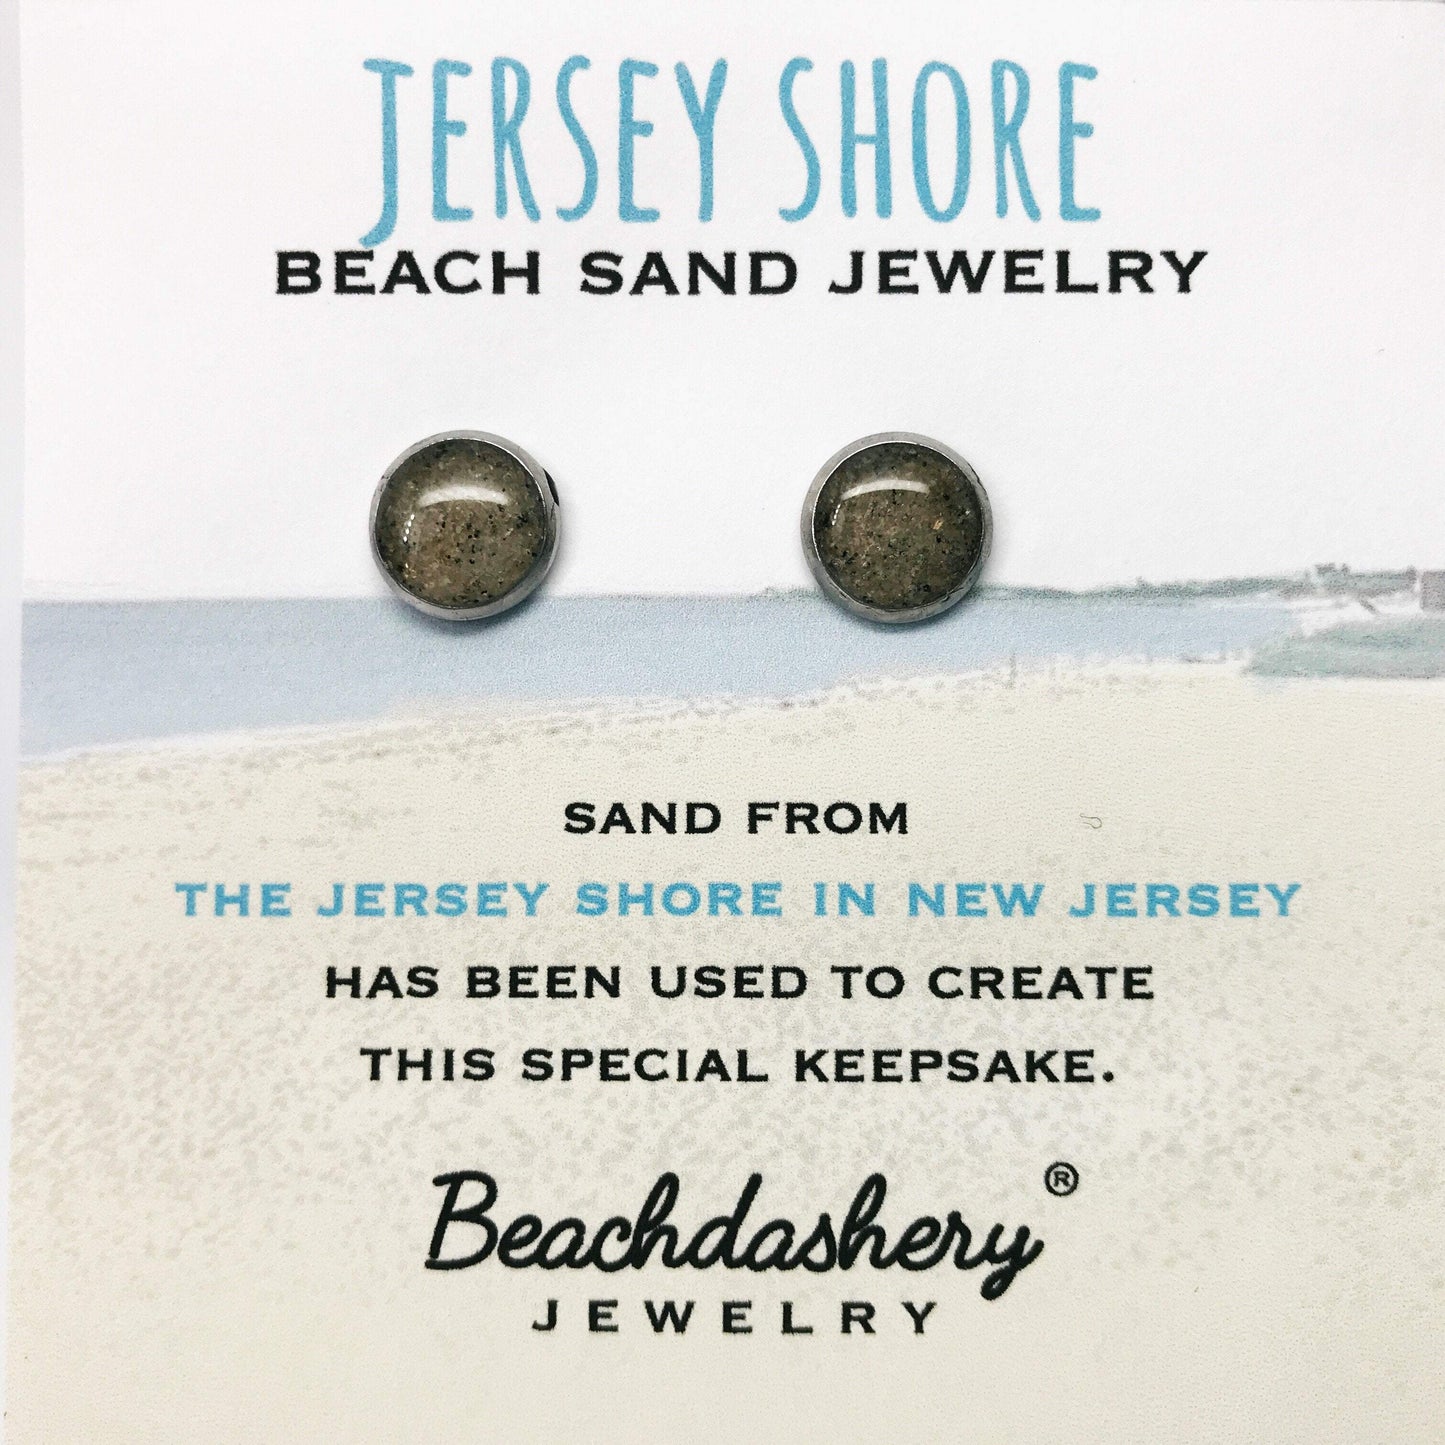 Jersey Shore Beach New Jersey Sand Jewelry Beachdashery